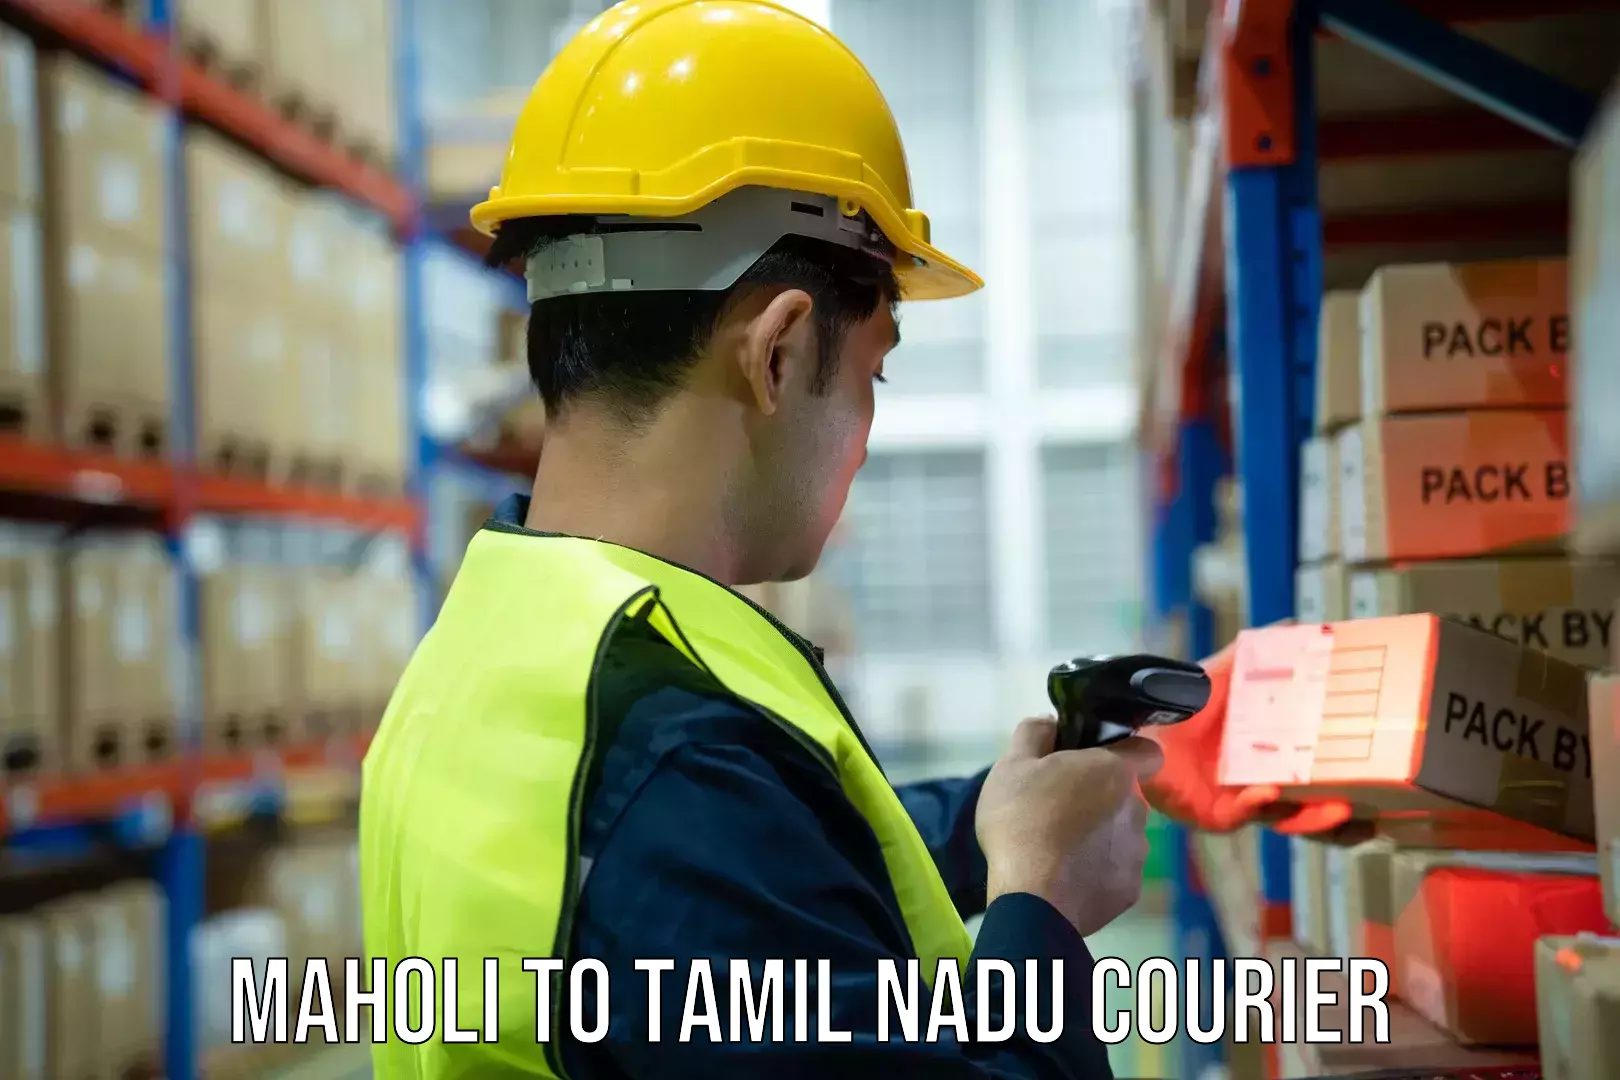 Courier service comparison Maholi to Tiruturaipundi